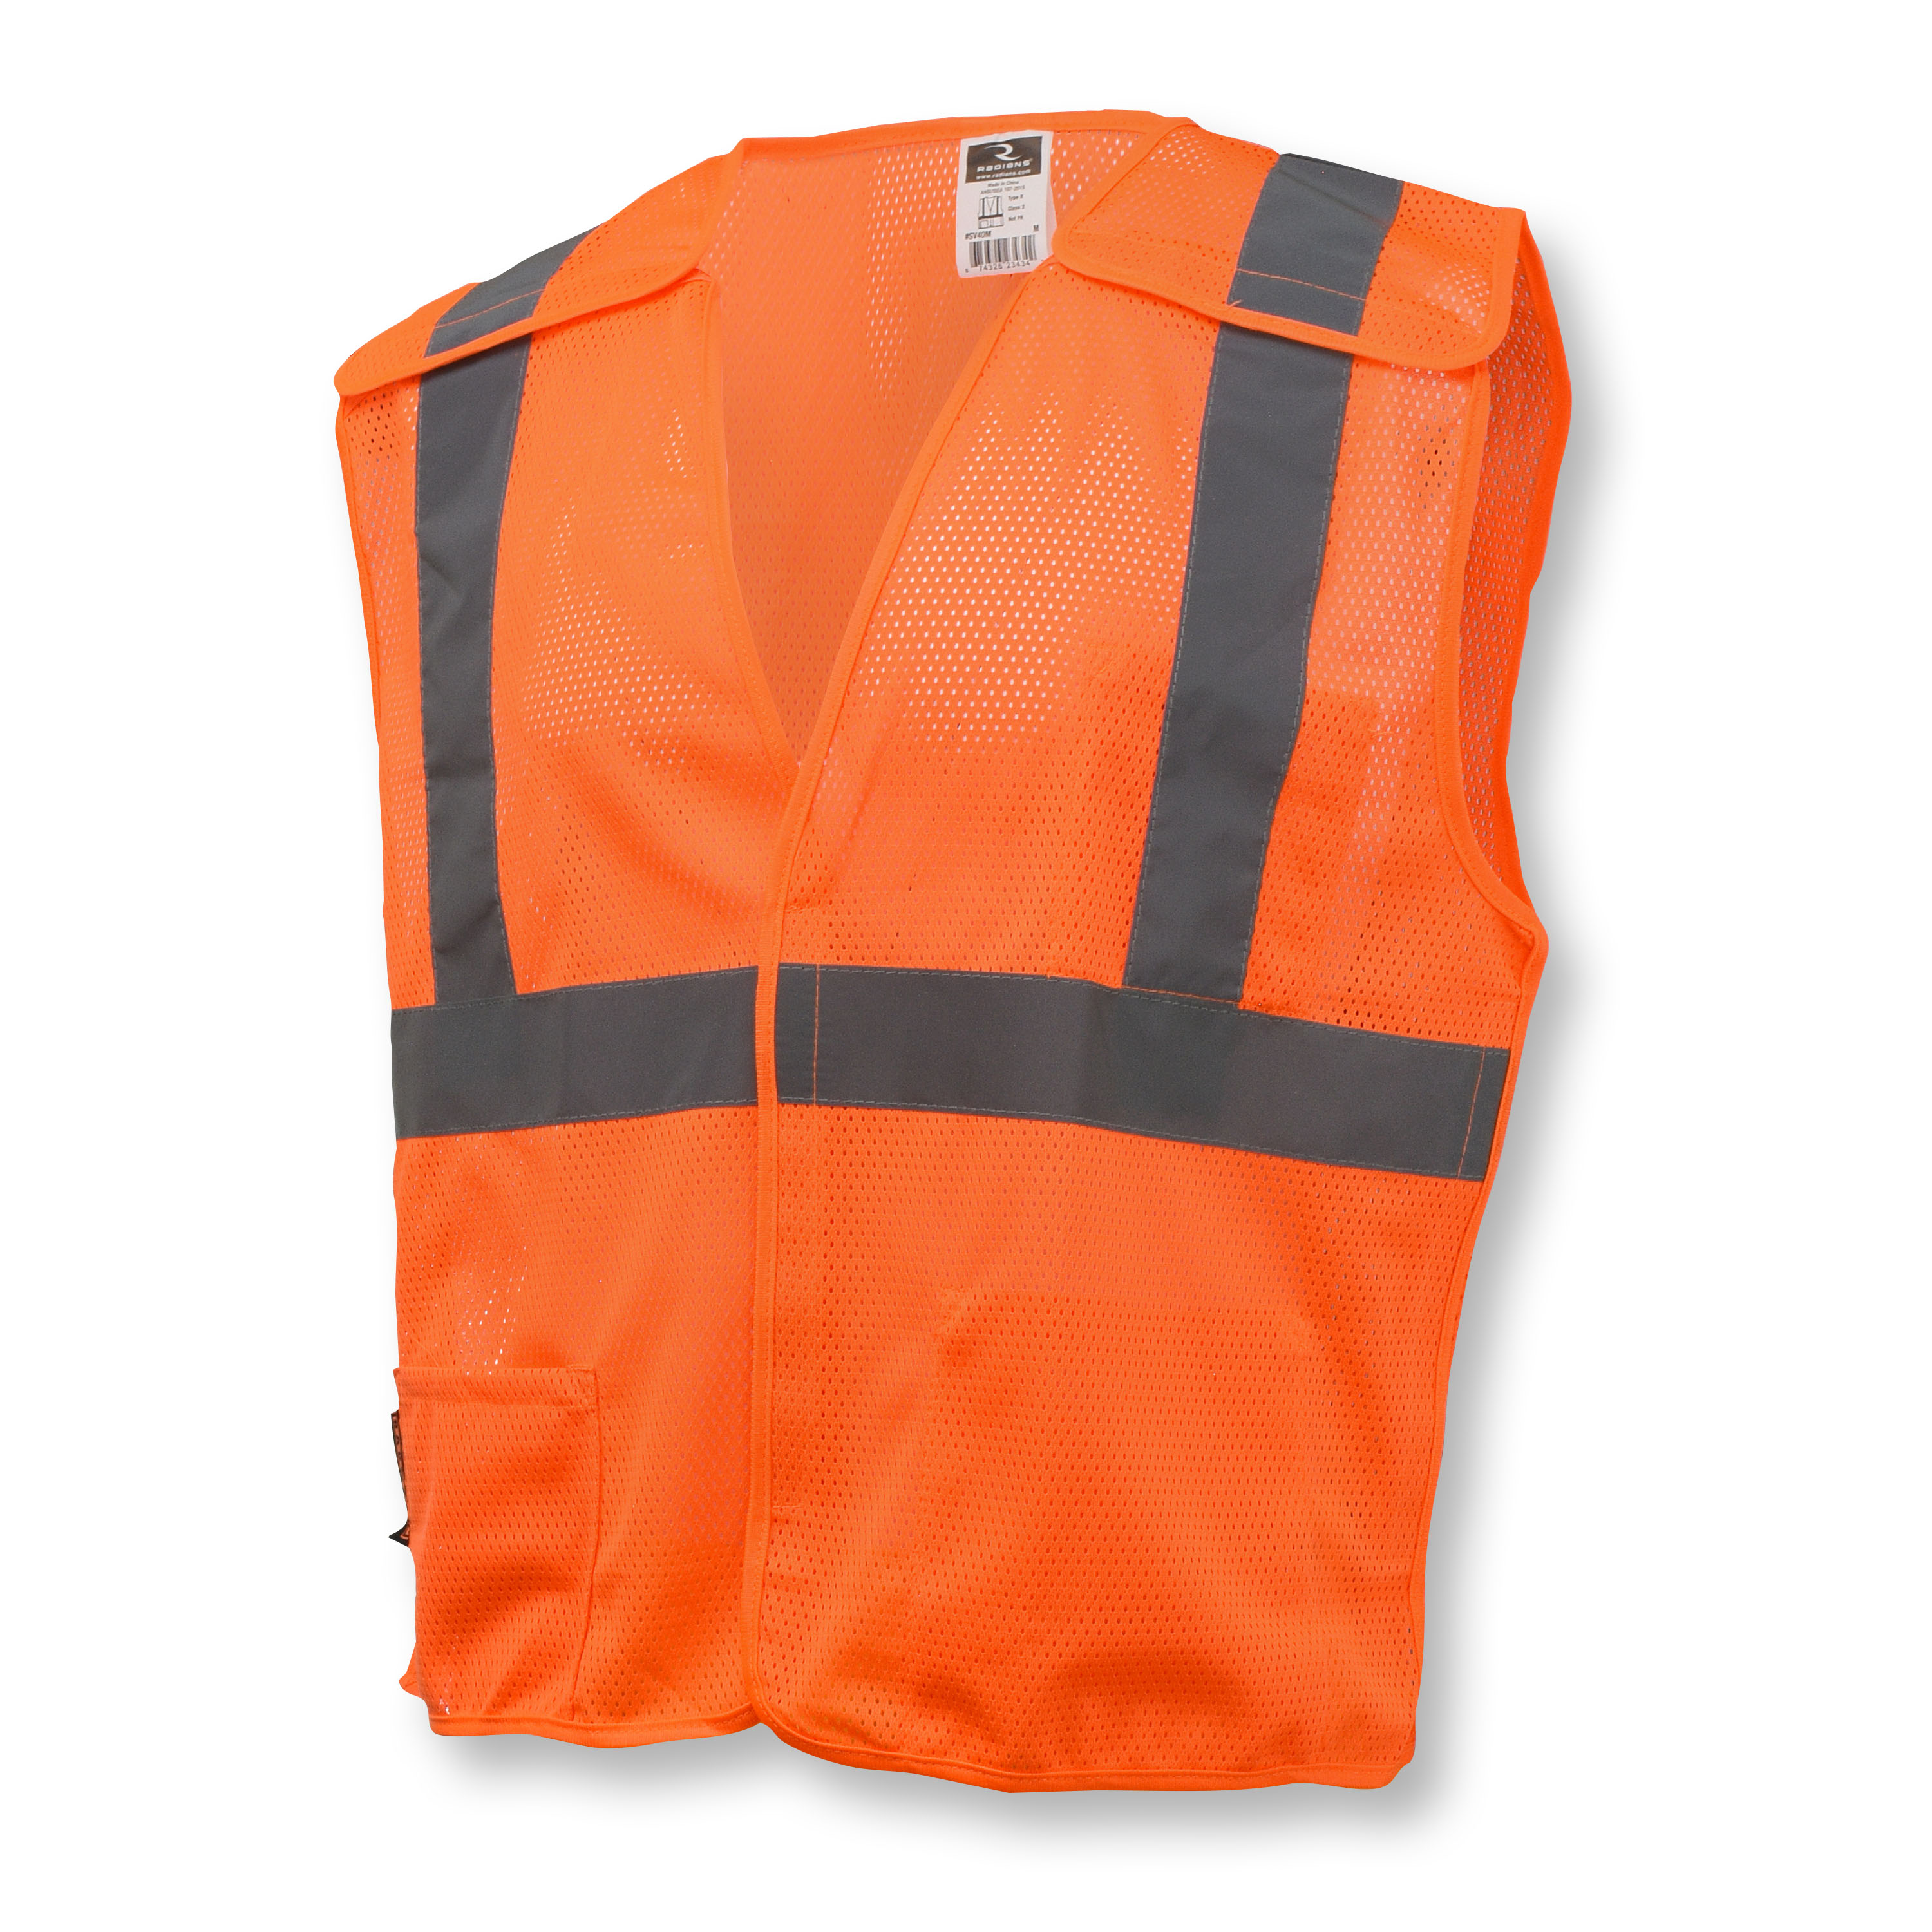 SV4 Economy Type R Class 2 Breakaway Mesh Safety Vest - Orange - Size L